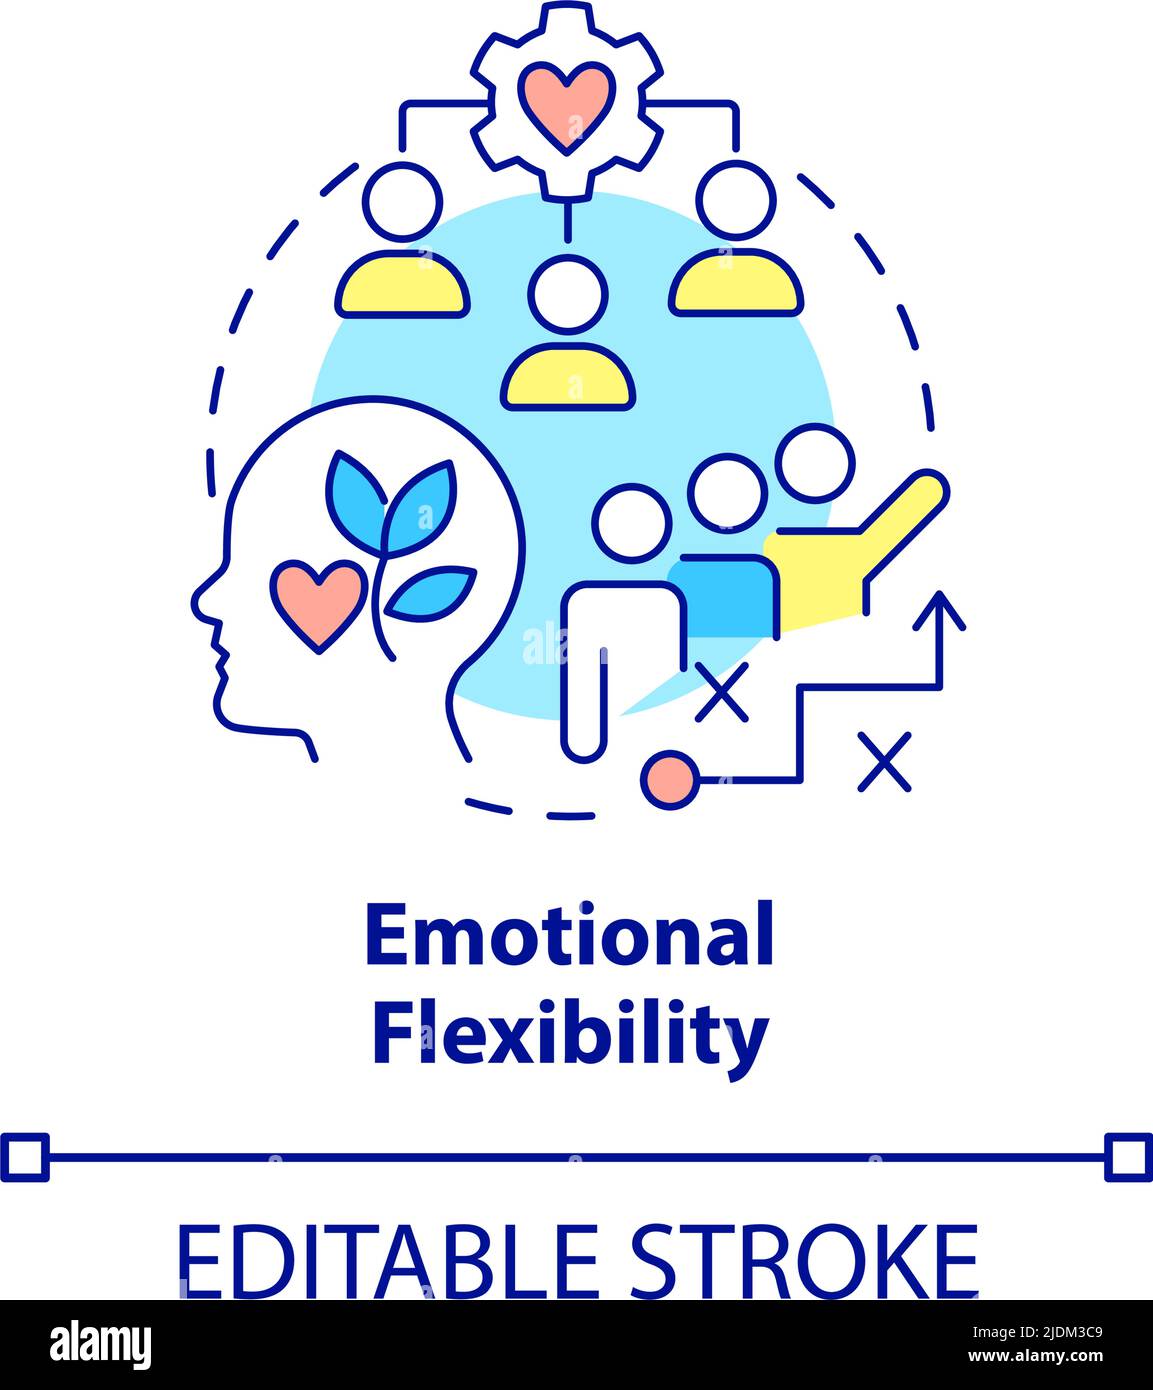 Emotional flexibility concept icon Stock Vector